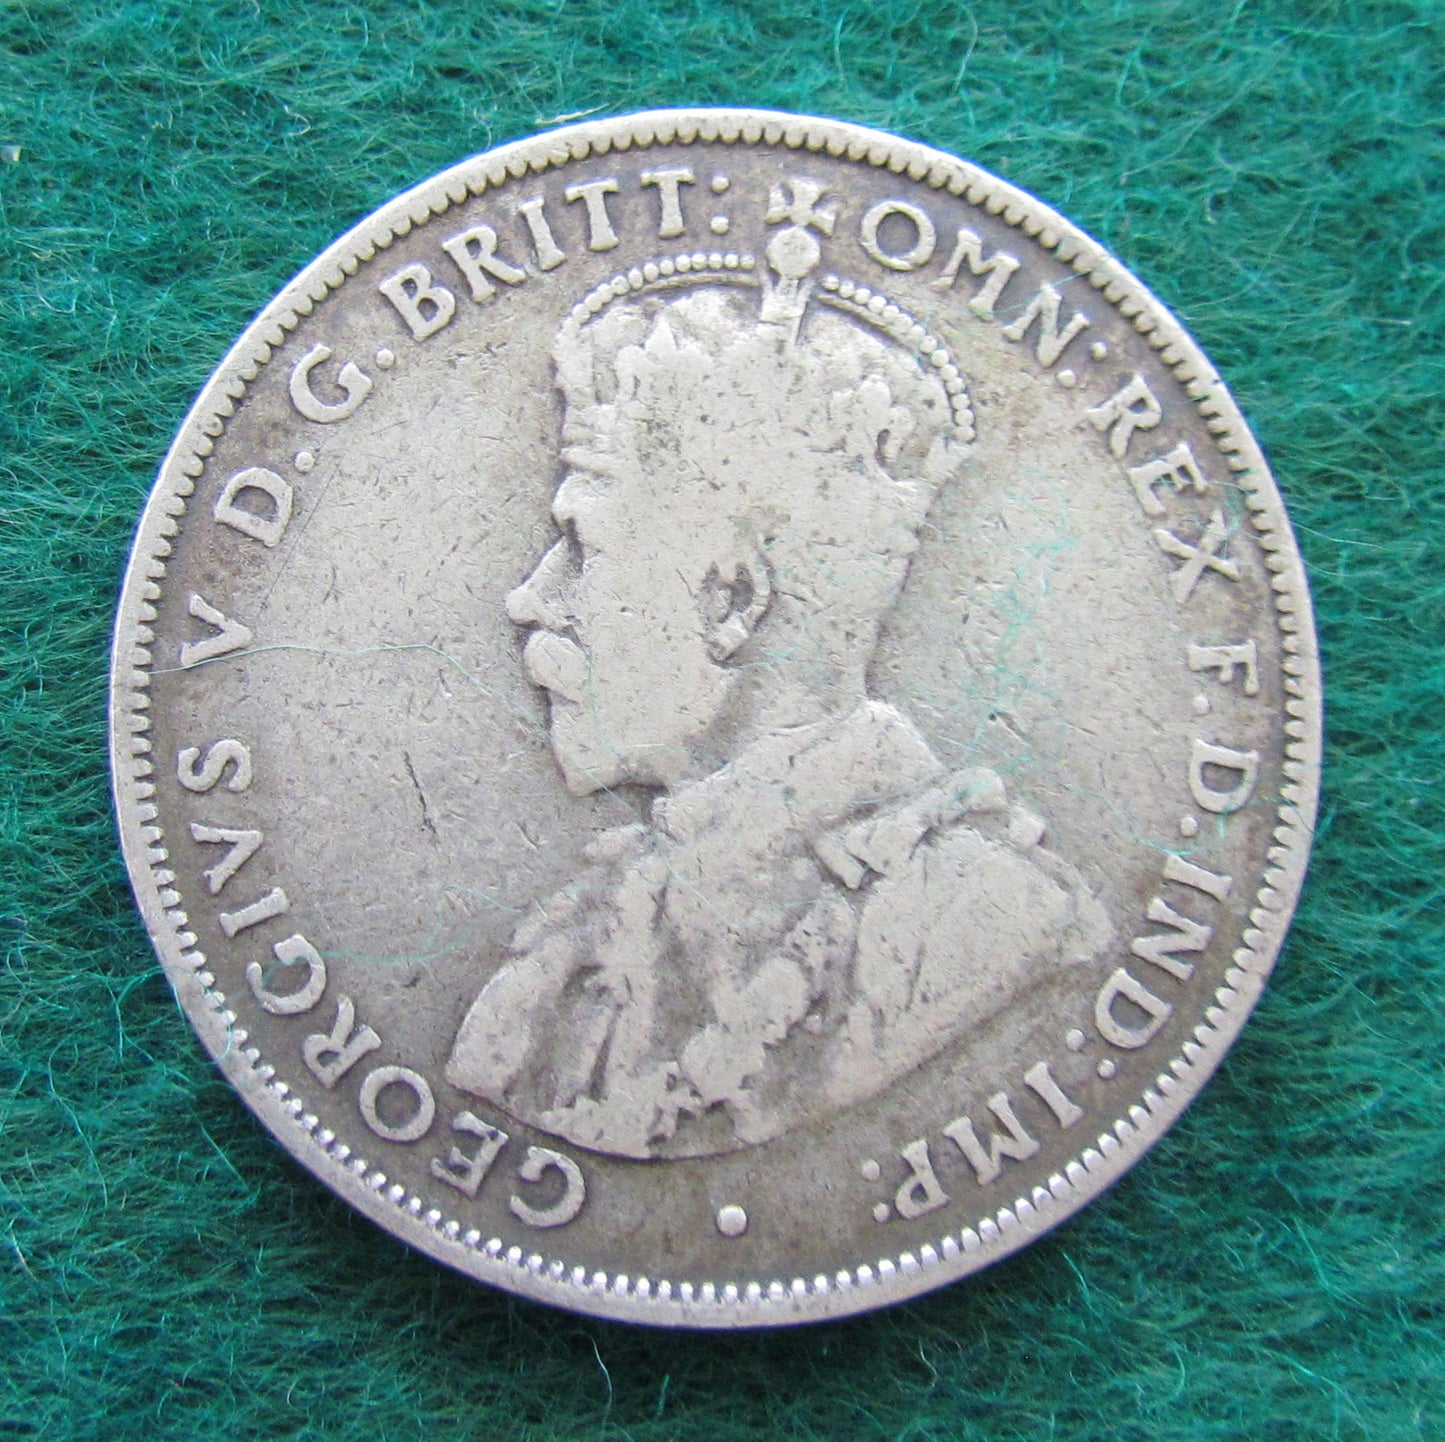 Australian 1914 H 2/- Florin King George V Coin - Circulated